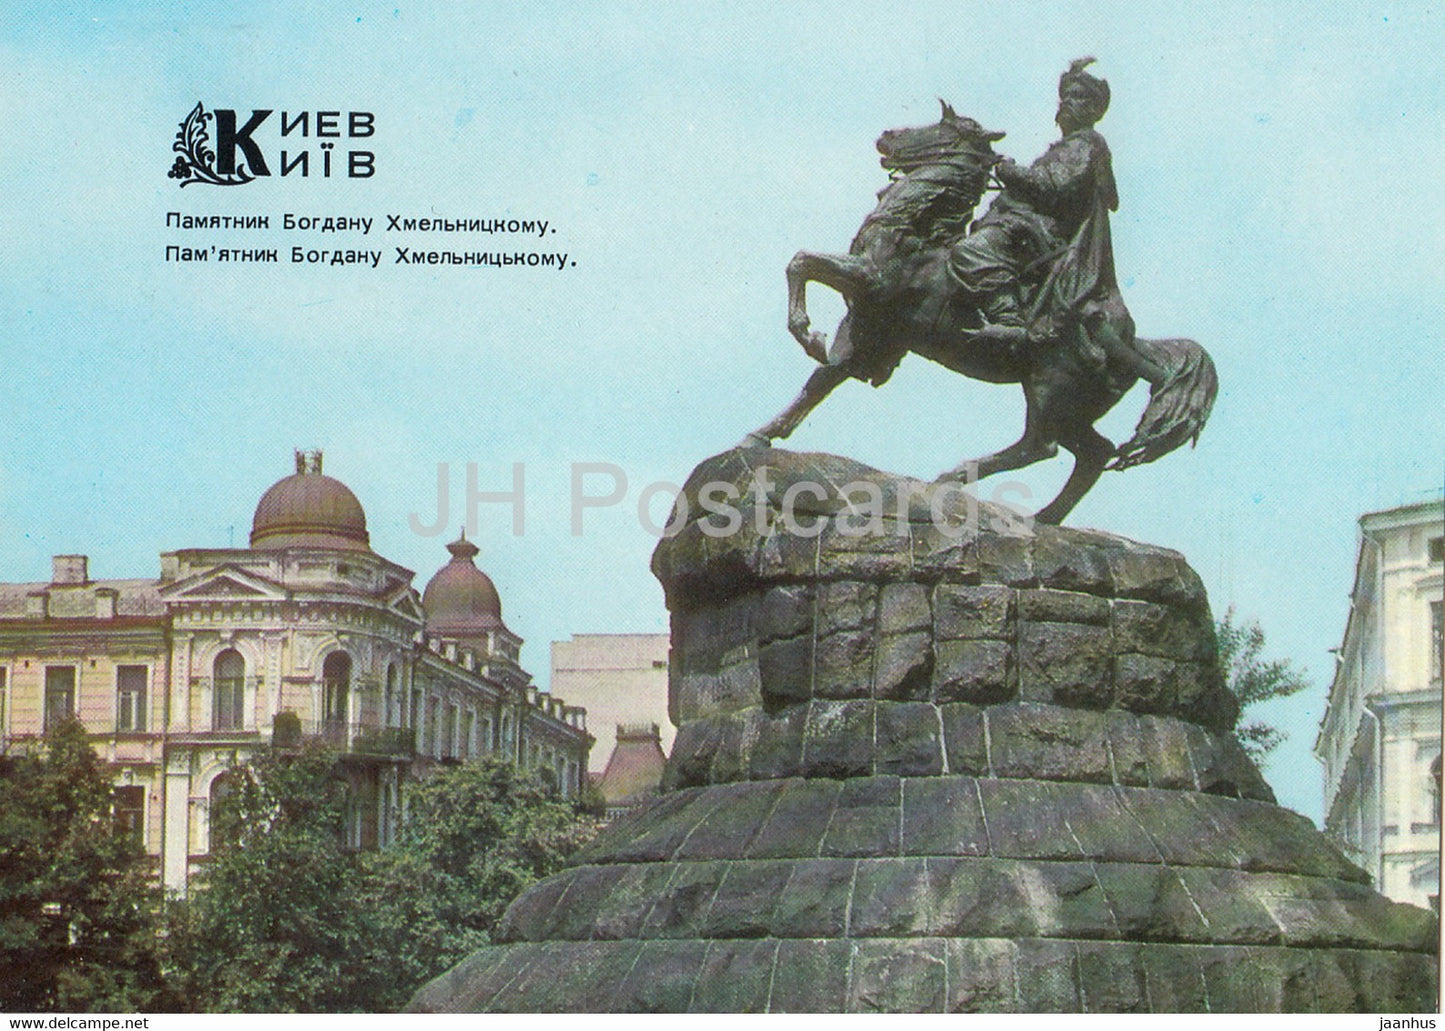 Kyiv - Kiev - monument to Bohdan Khmelnytsky - horse - postal stationery - 1979 - Ukraine USSR - unused - JH Postcards